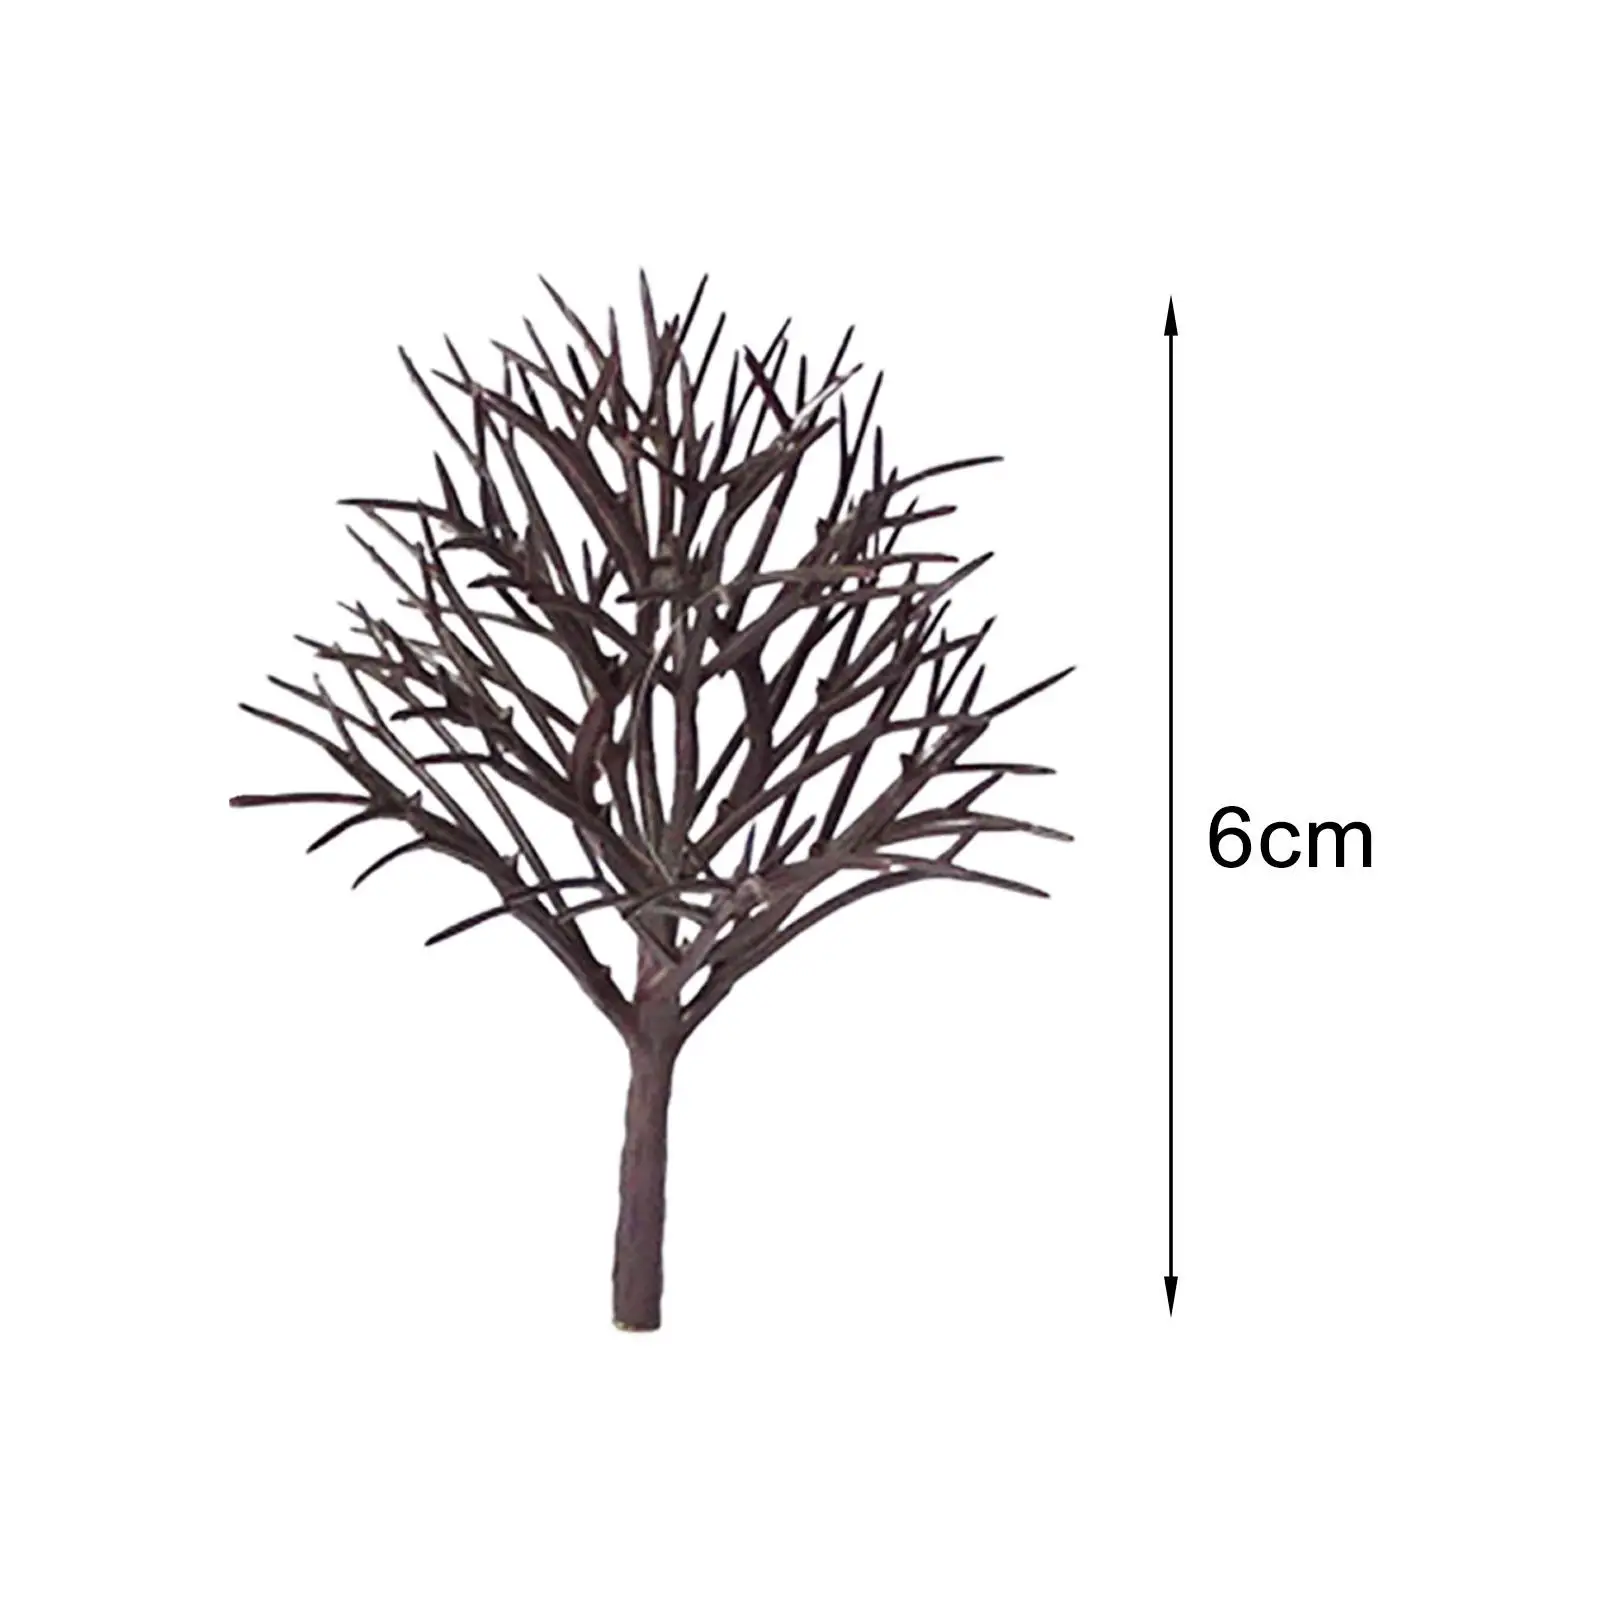 

70x Mini Model Trees Diorama Supplies 6cm Scenery Tree Train Scenery Architecture Trees for DIY Crafts Garden Landscape Scenery